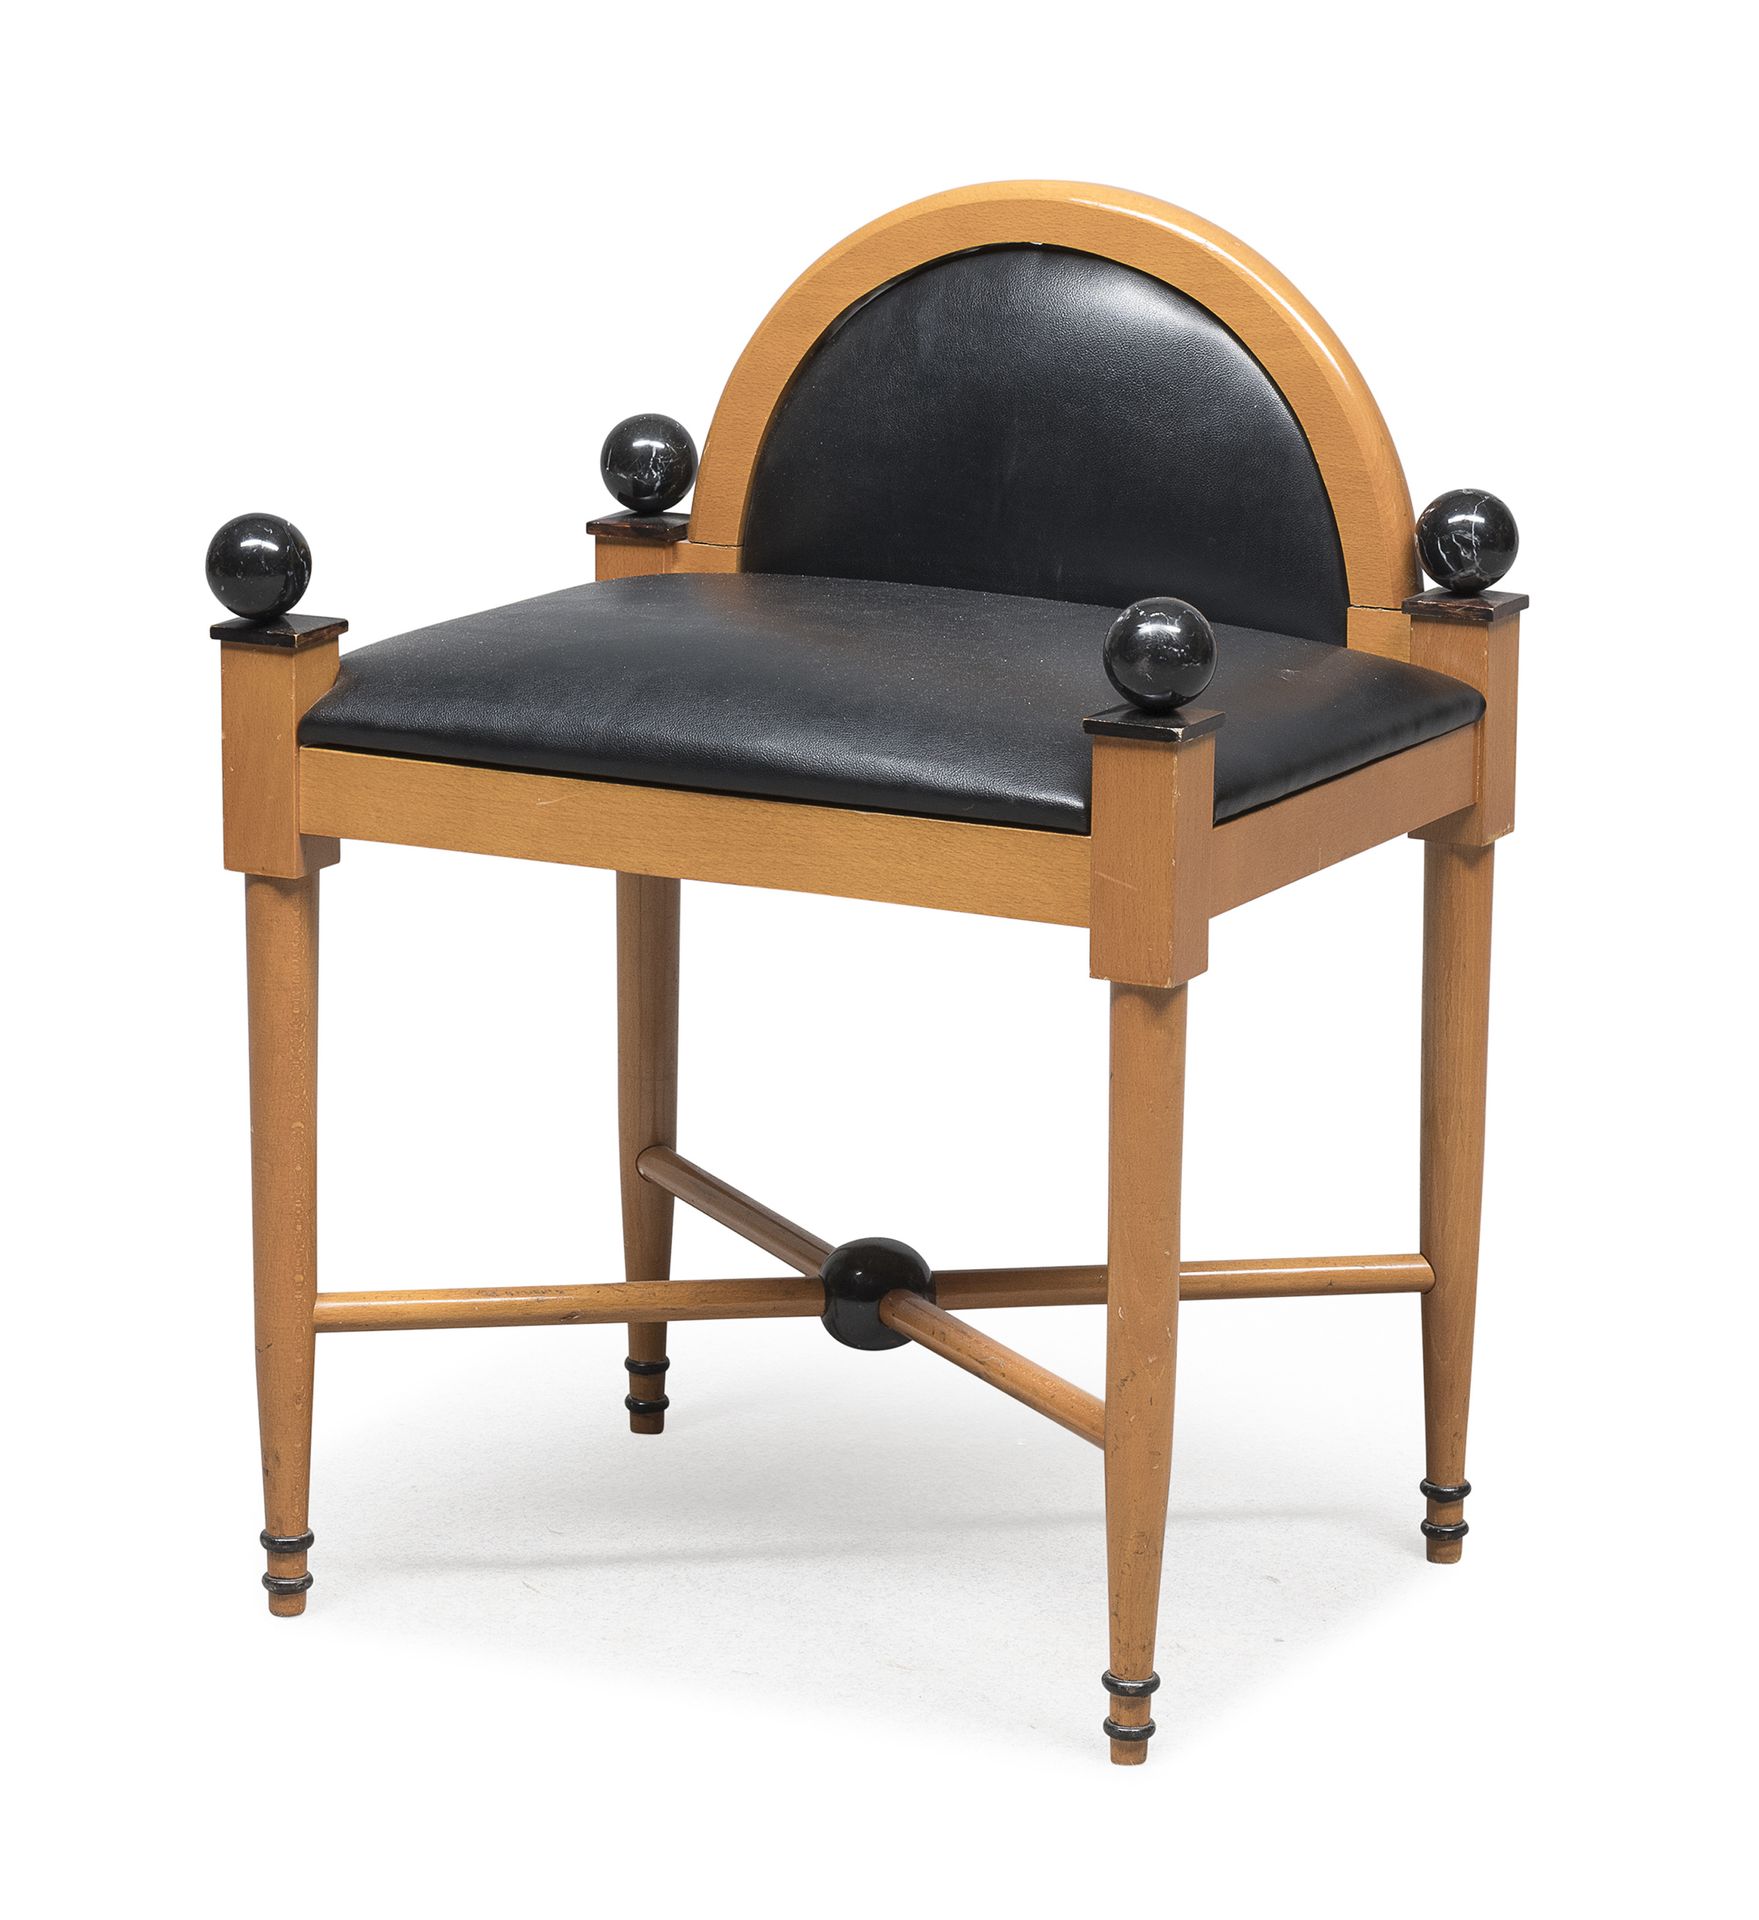 Null 榉木椅，1980年代装饰风格


有半月形靠背，黑檀木饰面和尖顶。皮质软垫。


尺寸 cm. 70 x 40 x 49.